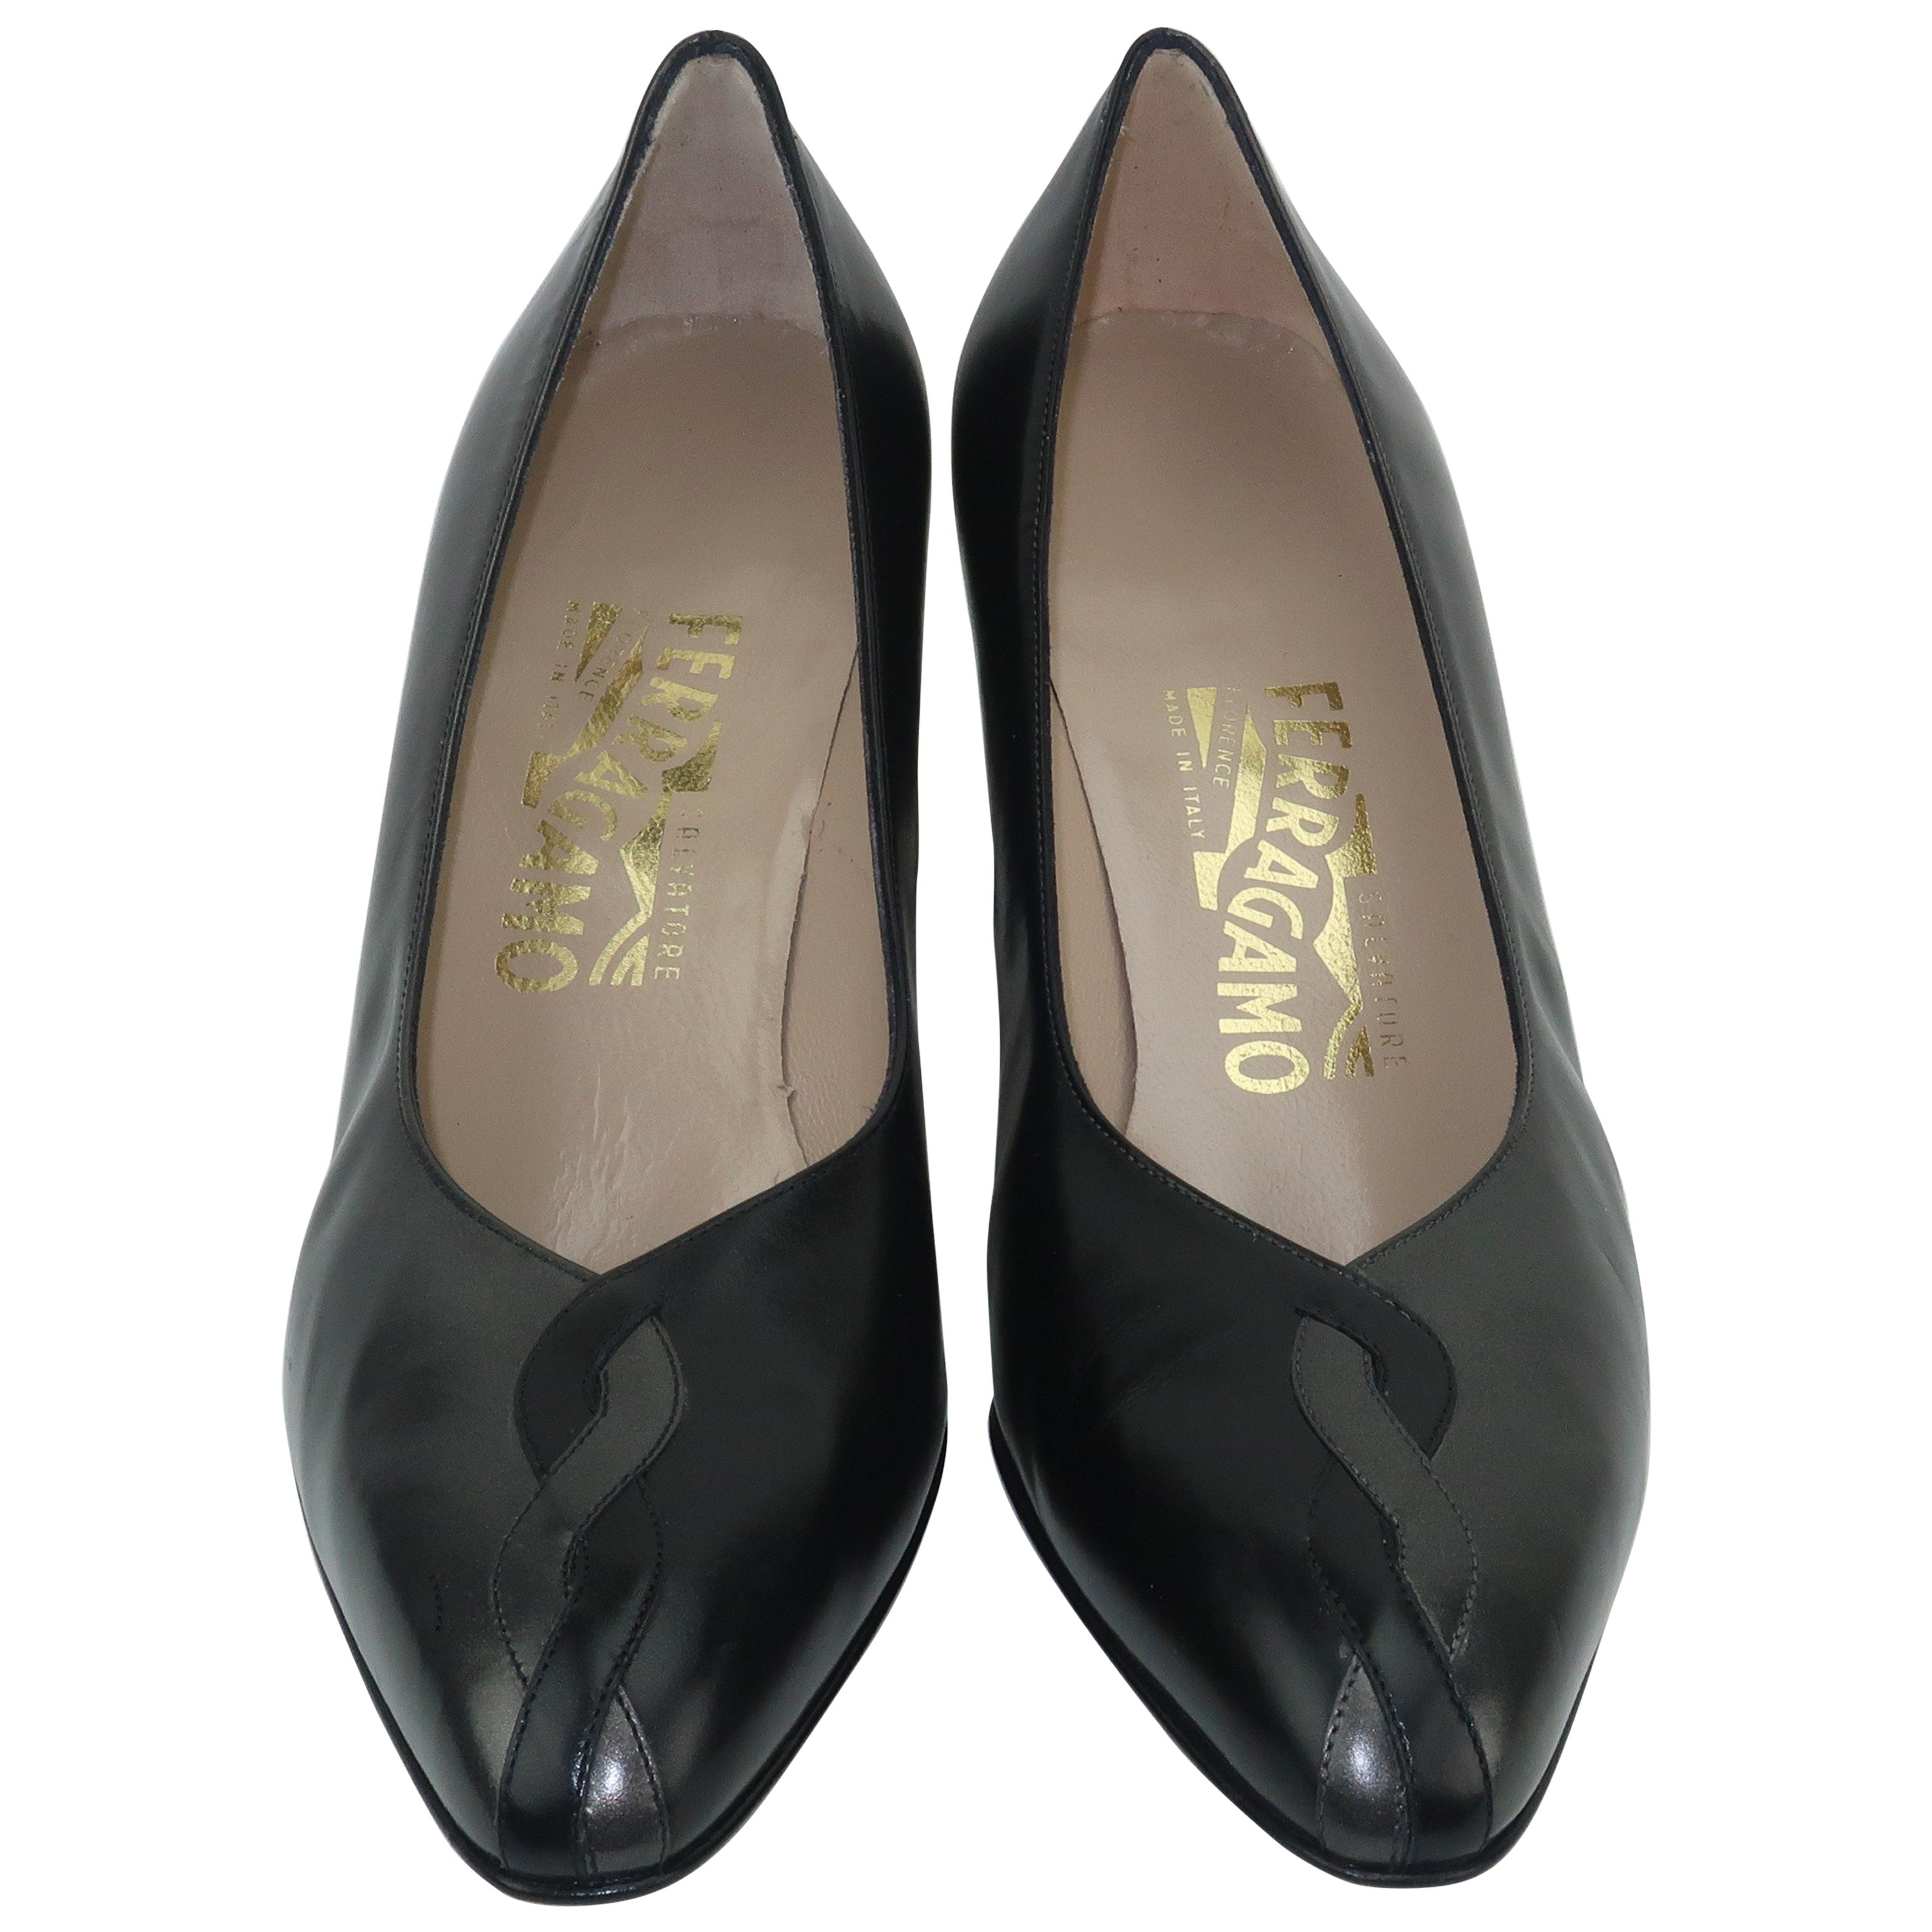 New Salvatore Ferragamo Limited Archive Edition Sz 38 1930s Style Heels ...